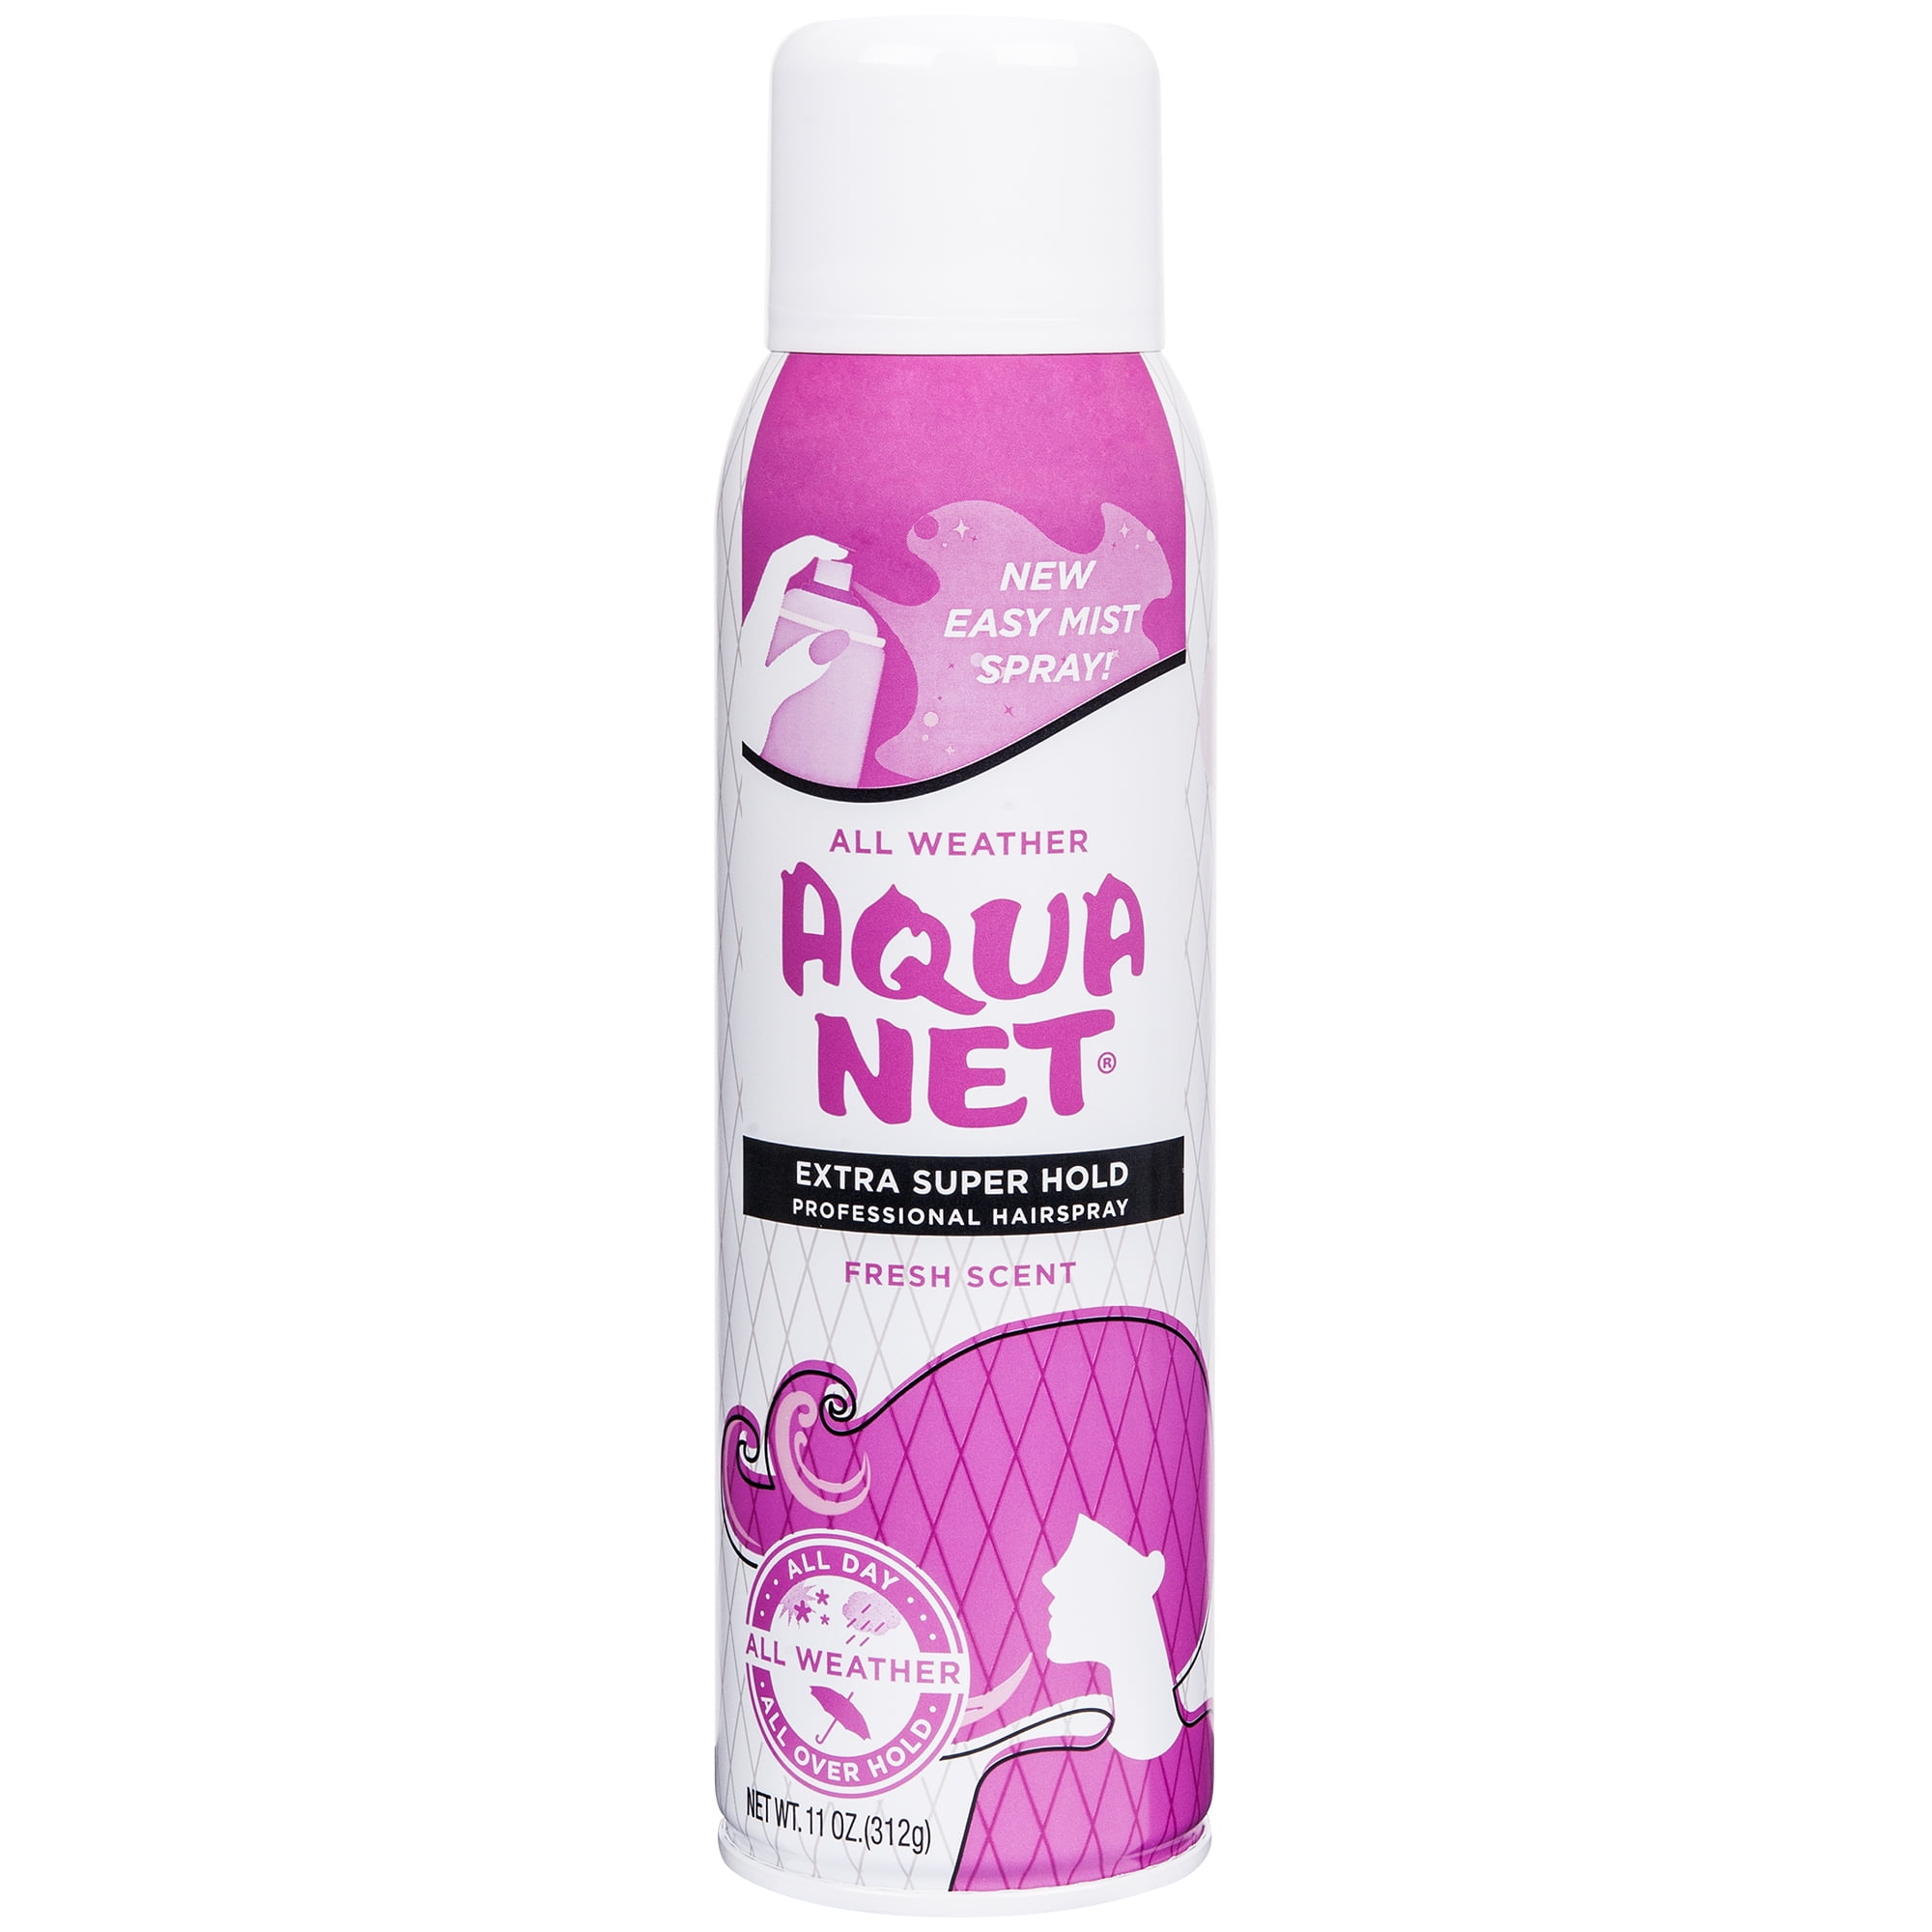 Aqua Net Hairspray, Extra Super Hold, Fresh Scent, 11 oz Aerosol Can.